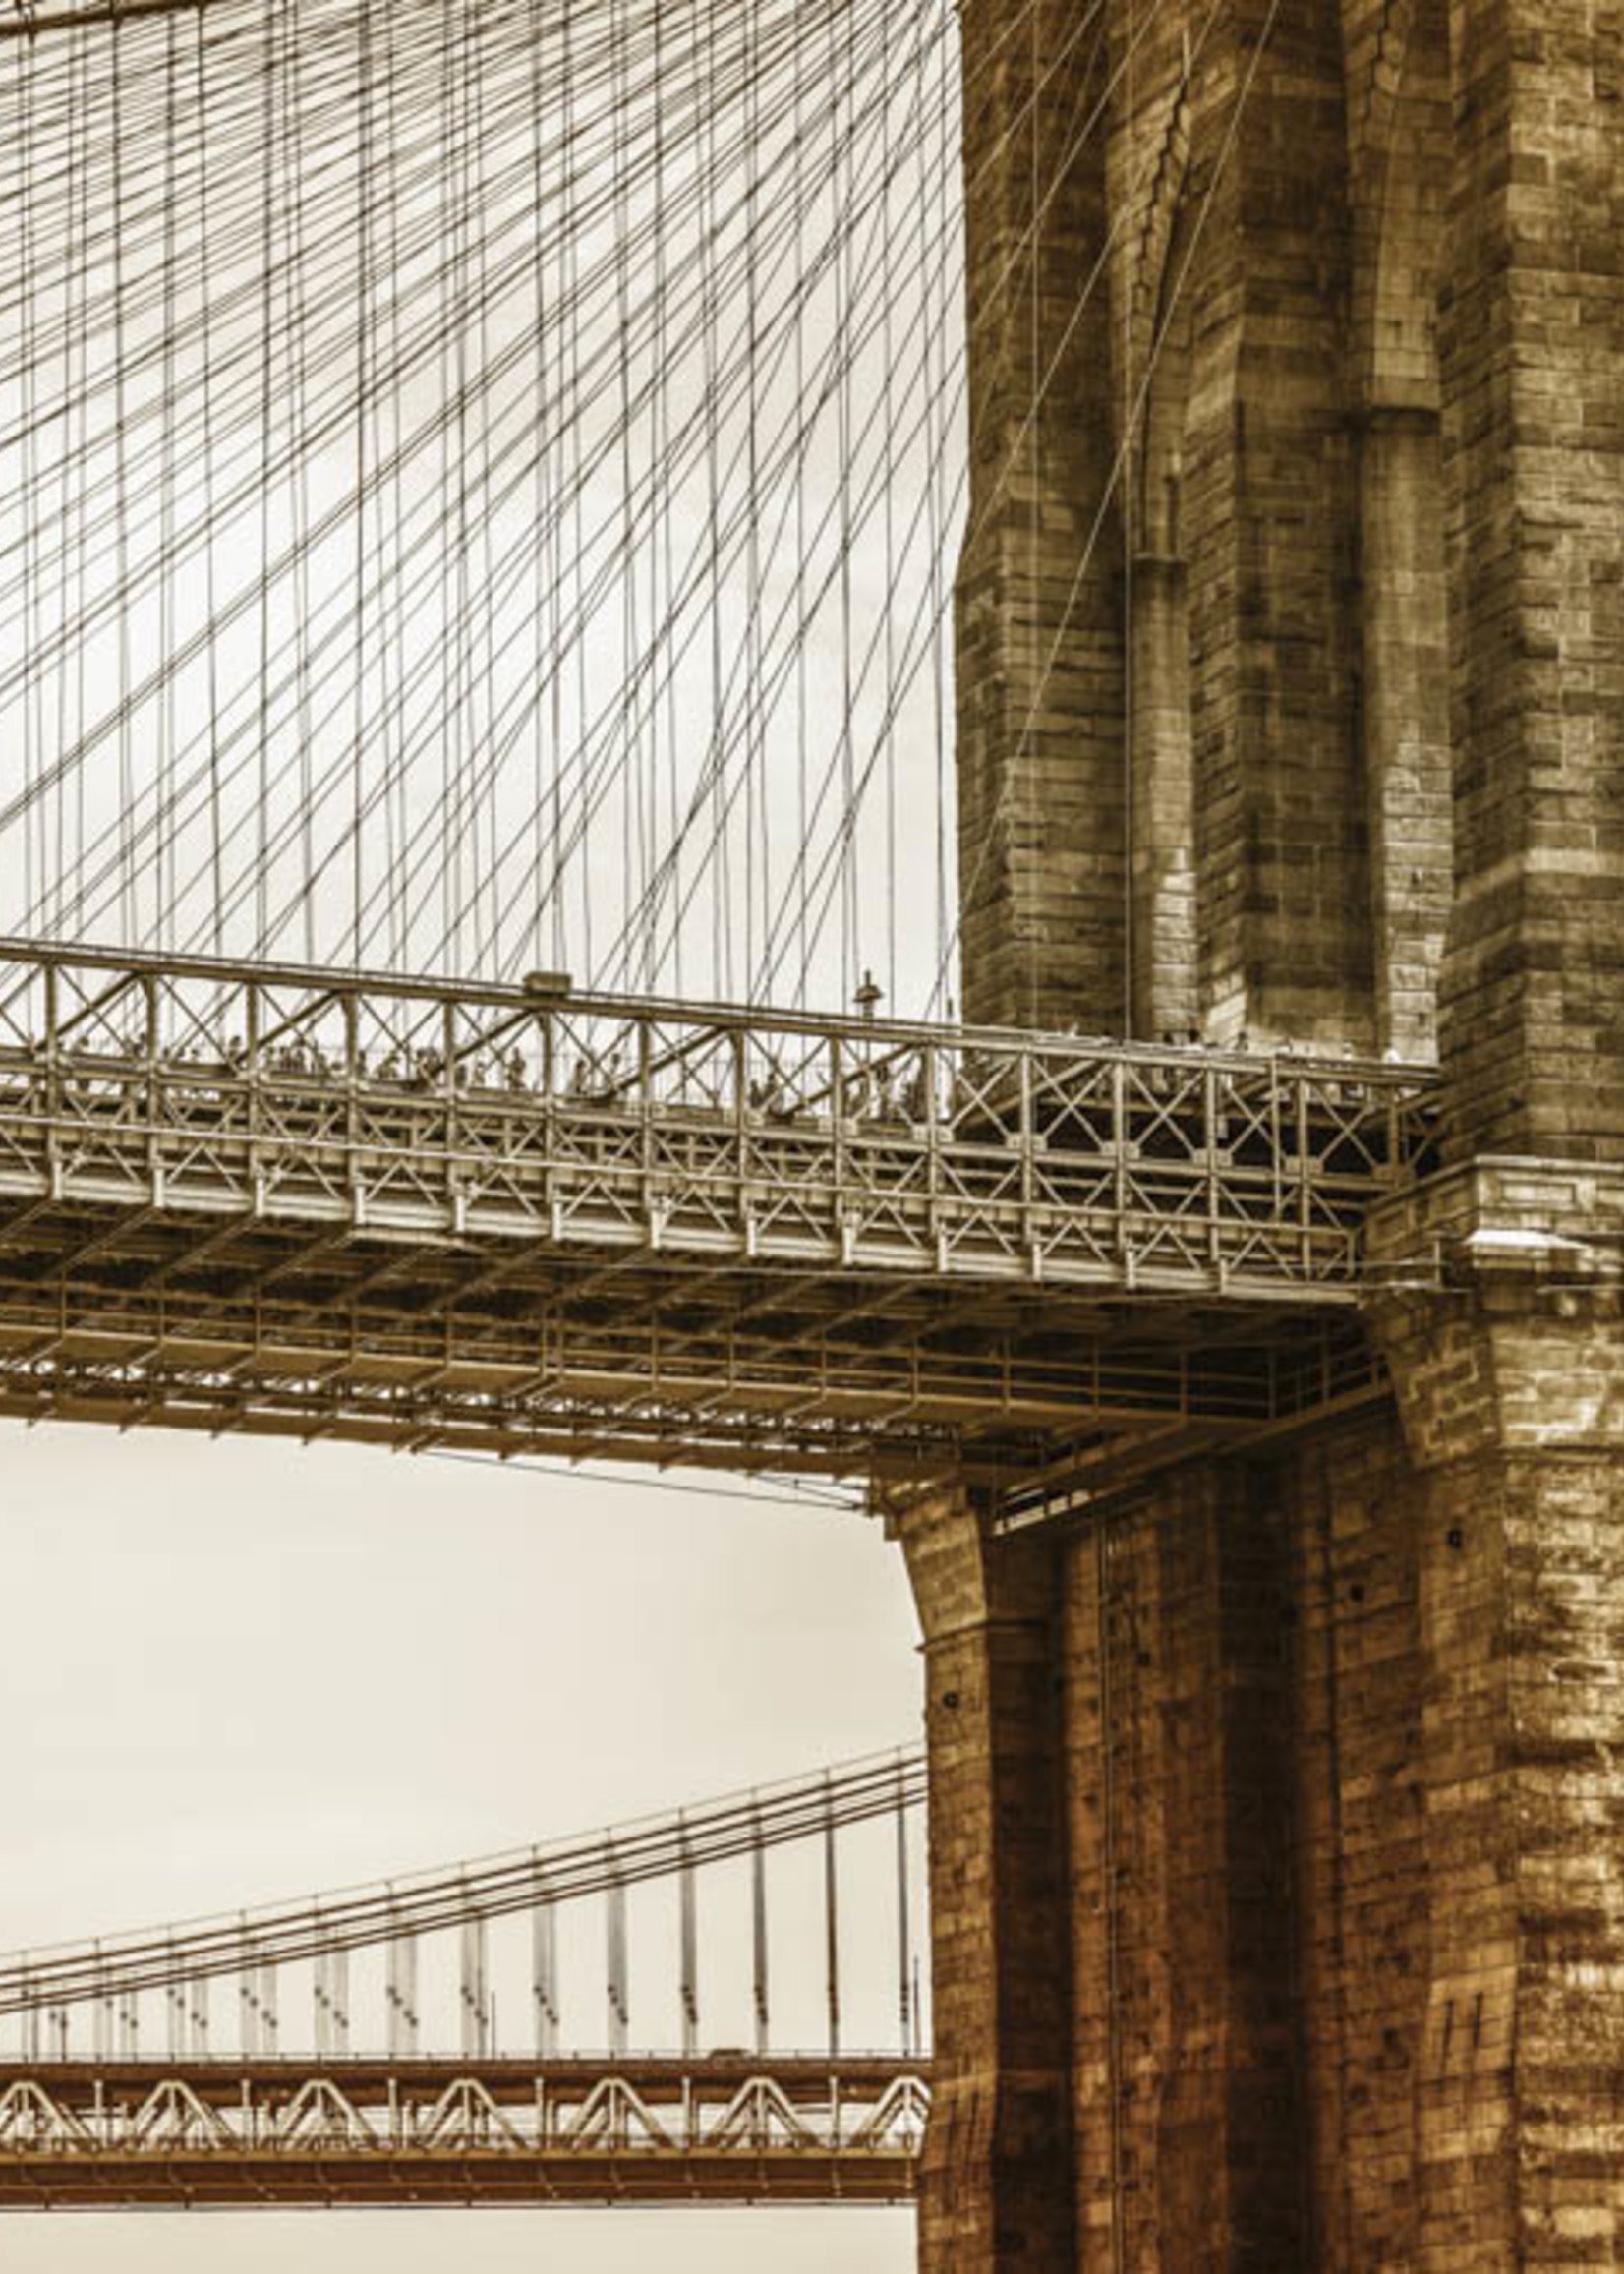 Frans van Steijn Wall photo "NY Brooklyn Bridge" Aluminum on Dibond 120 cm